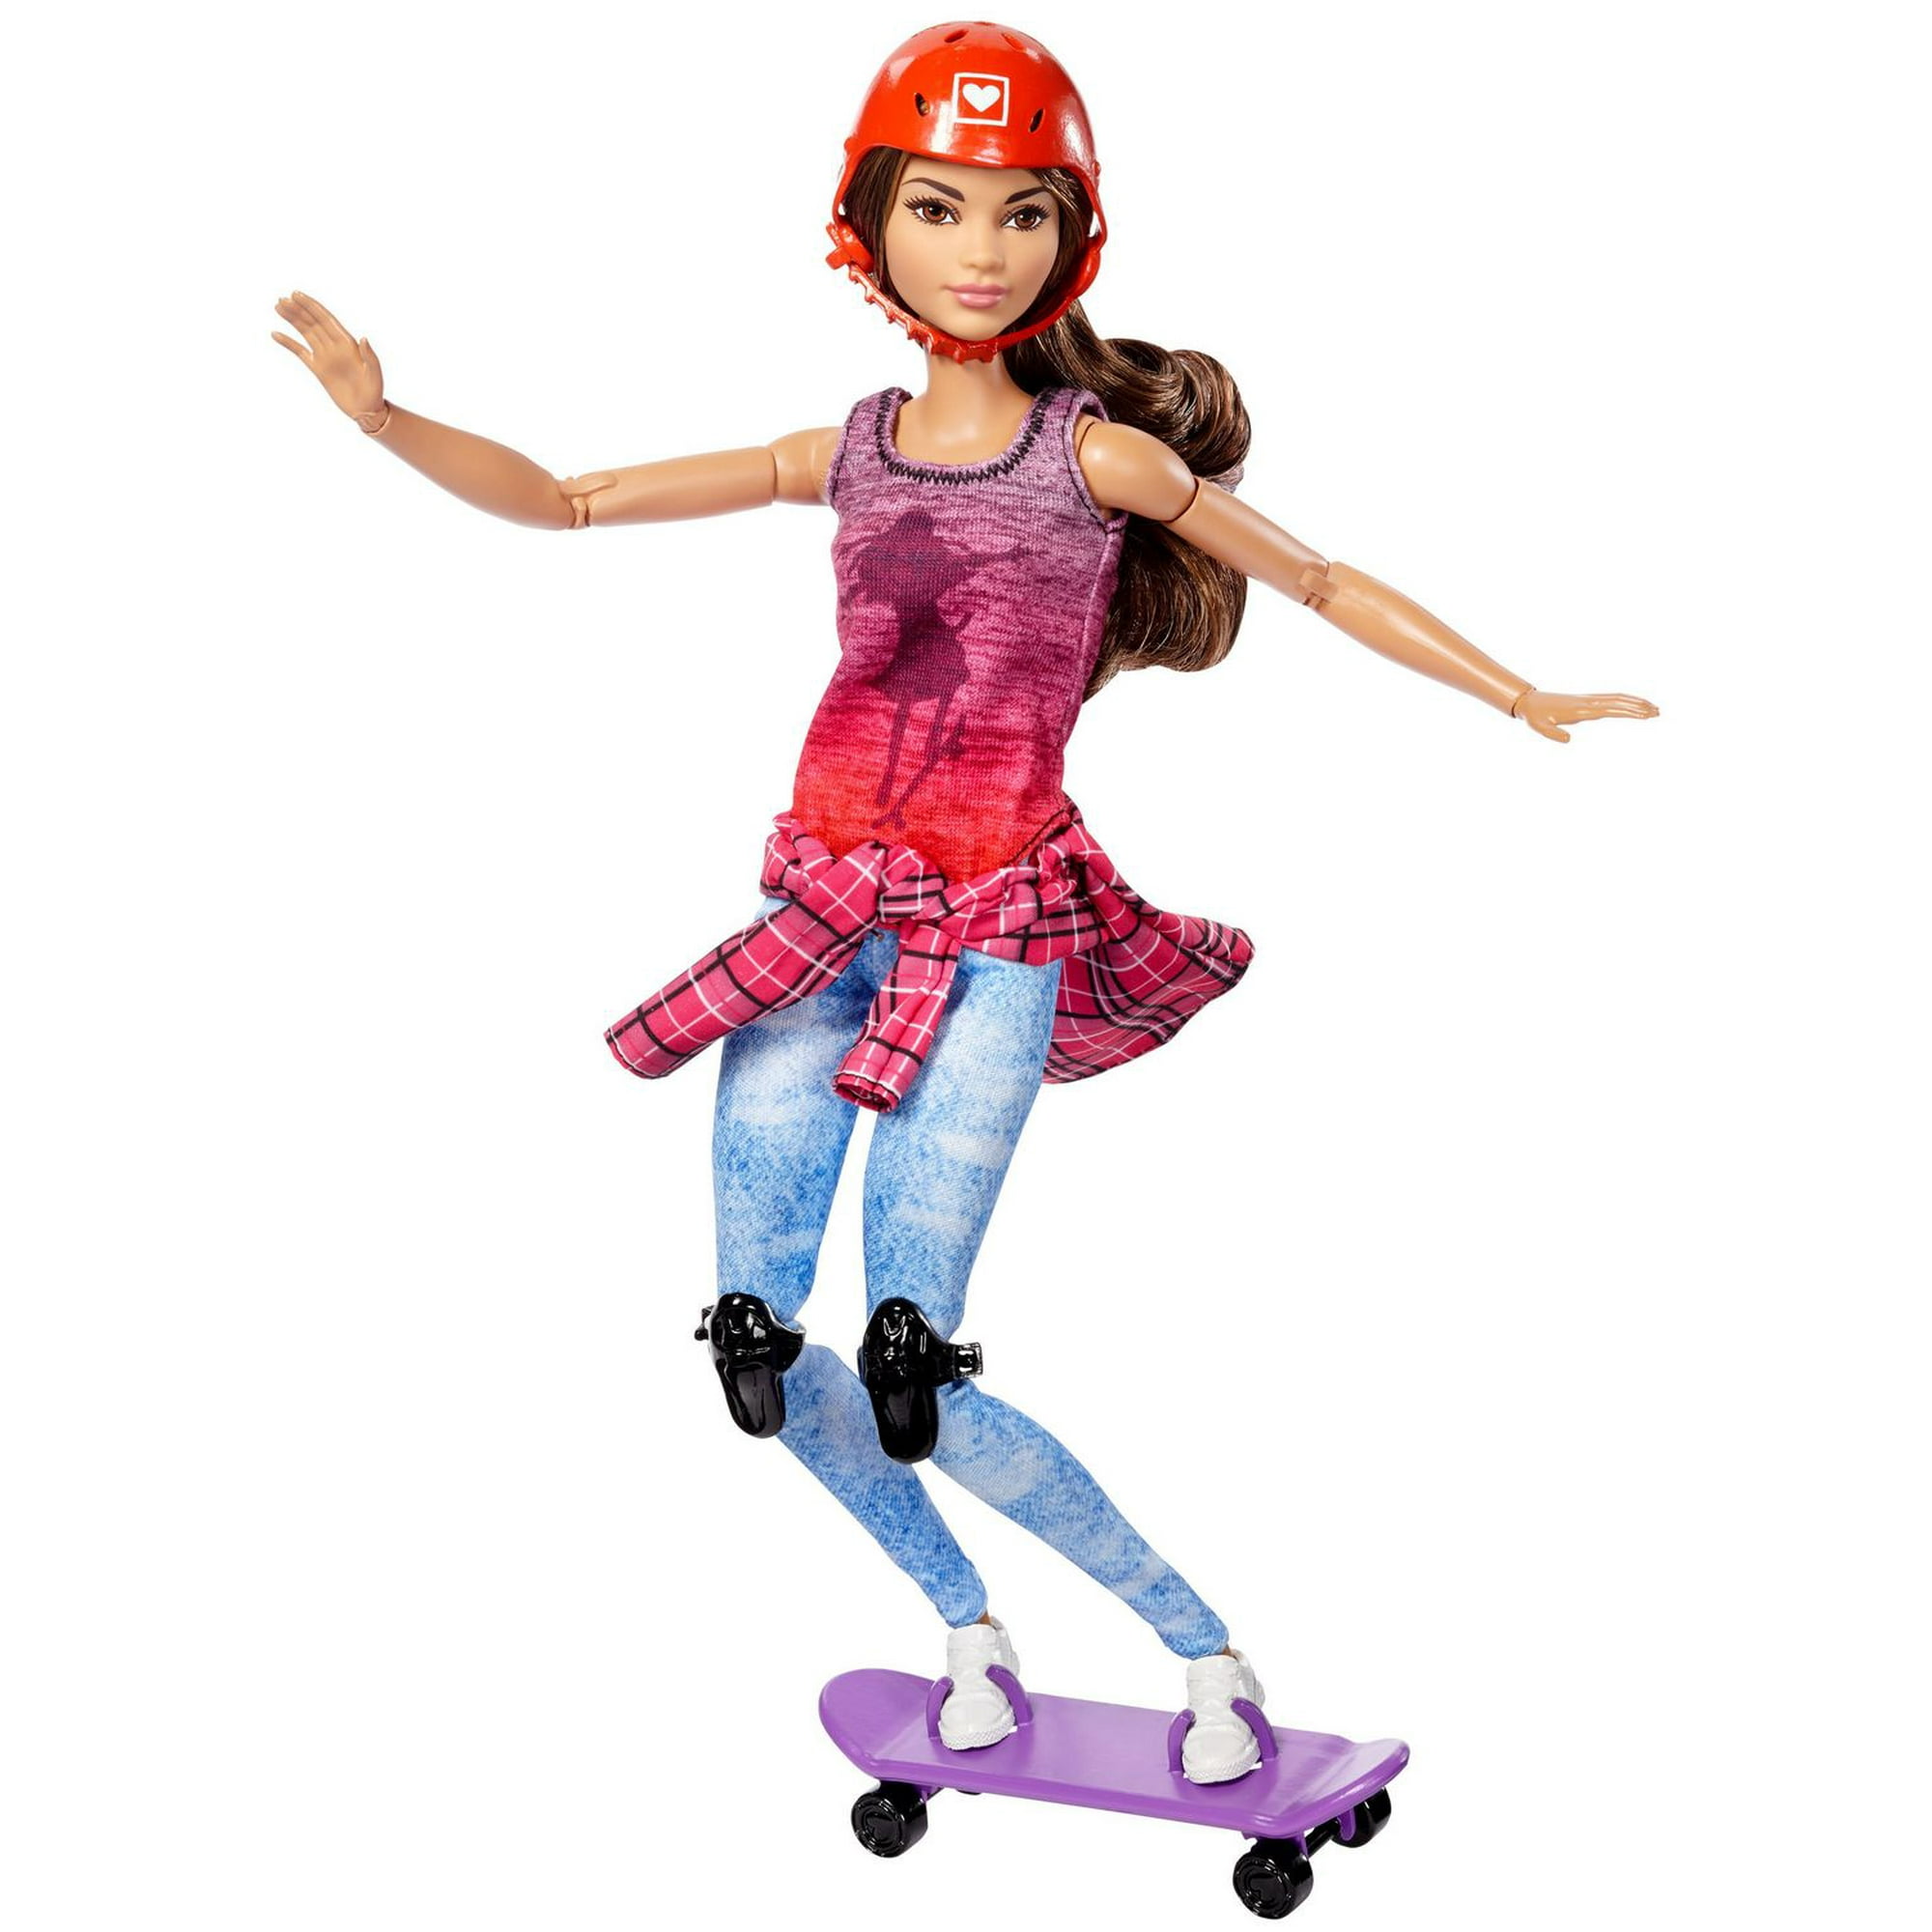 Barbie Made to Move Skateboarder 